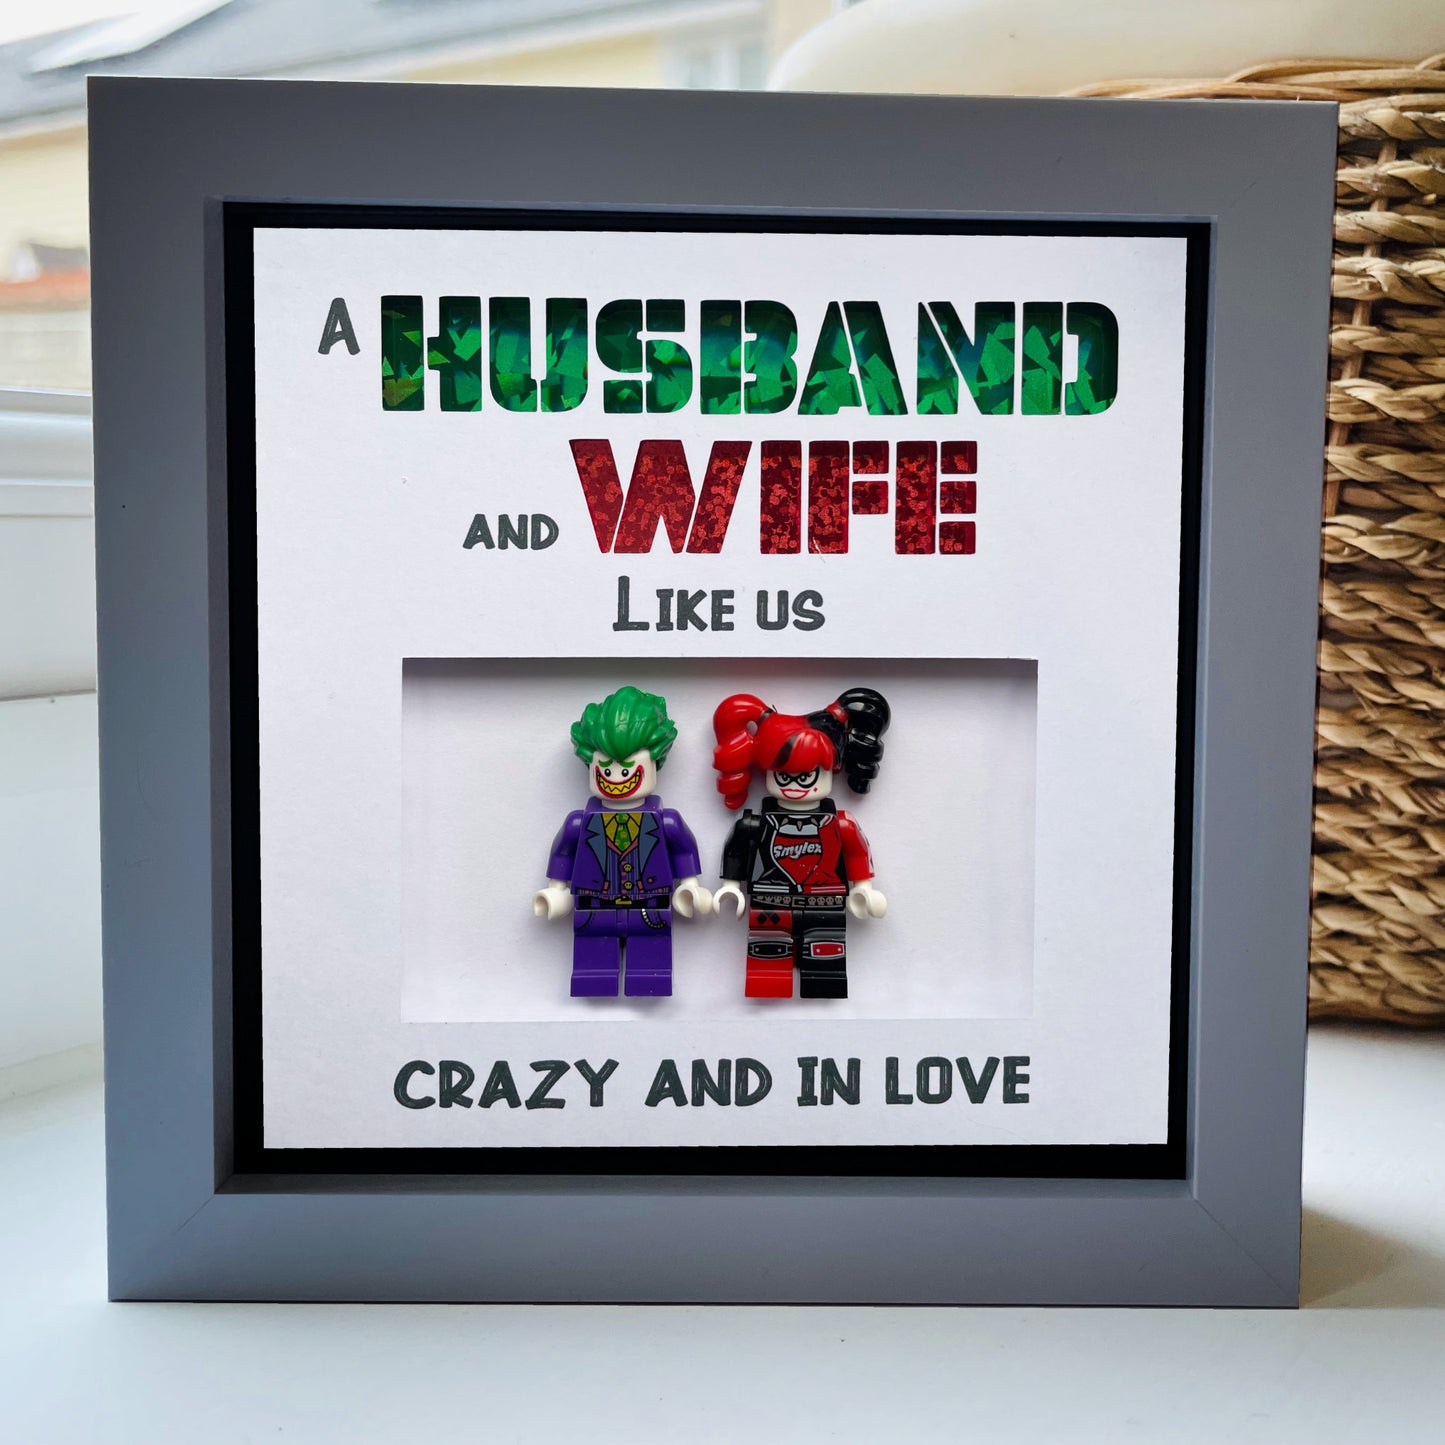 Husband and wife like us Character Frame - Joker